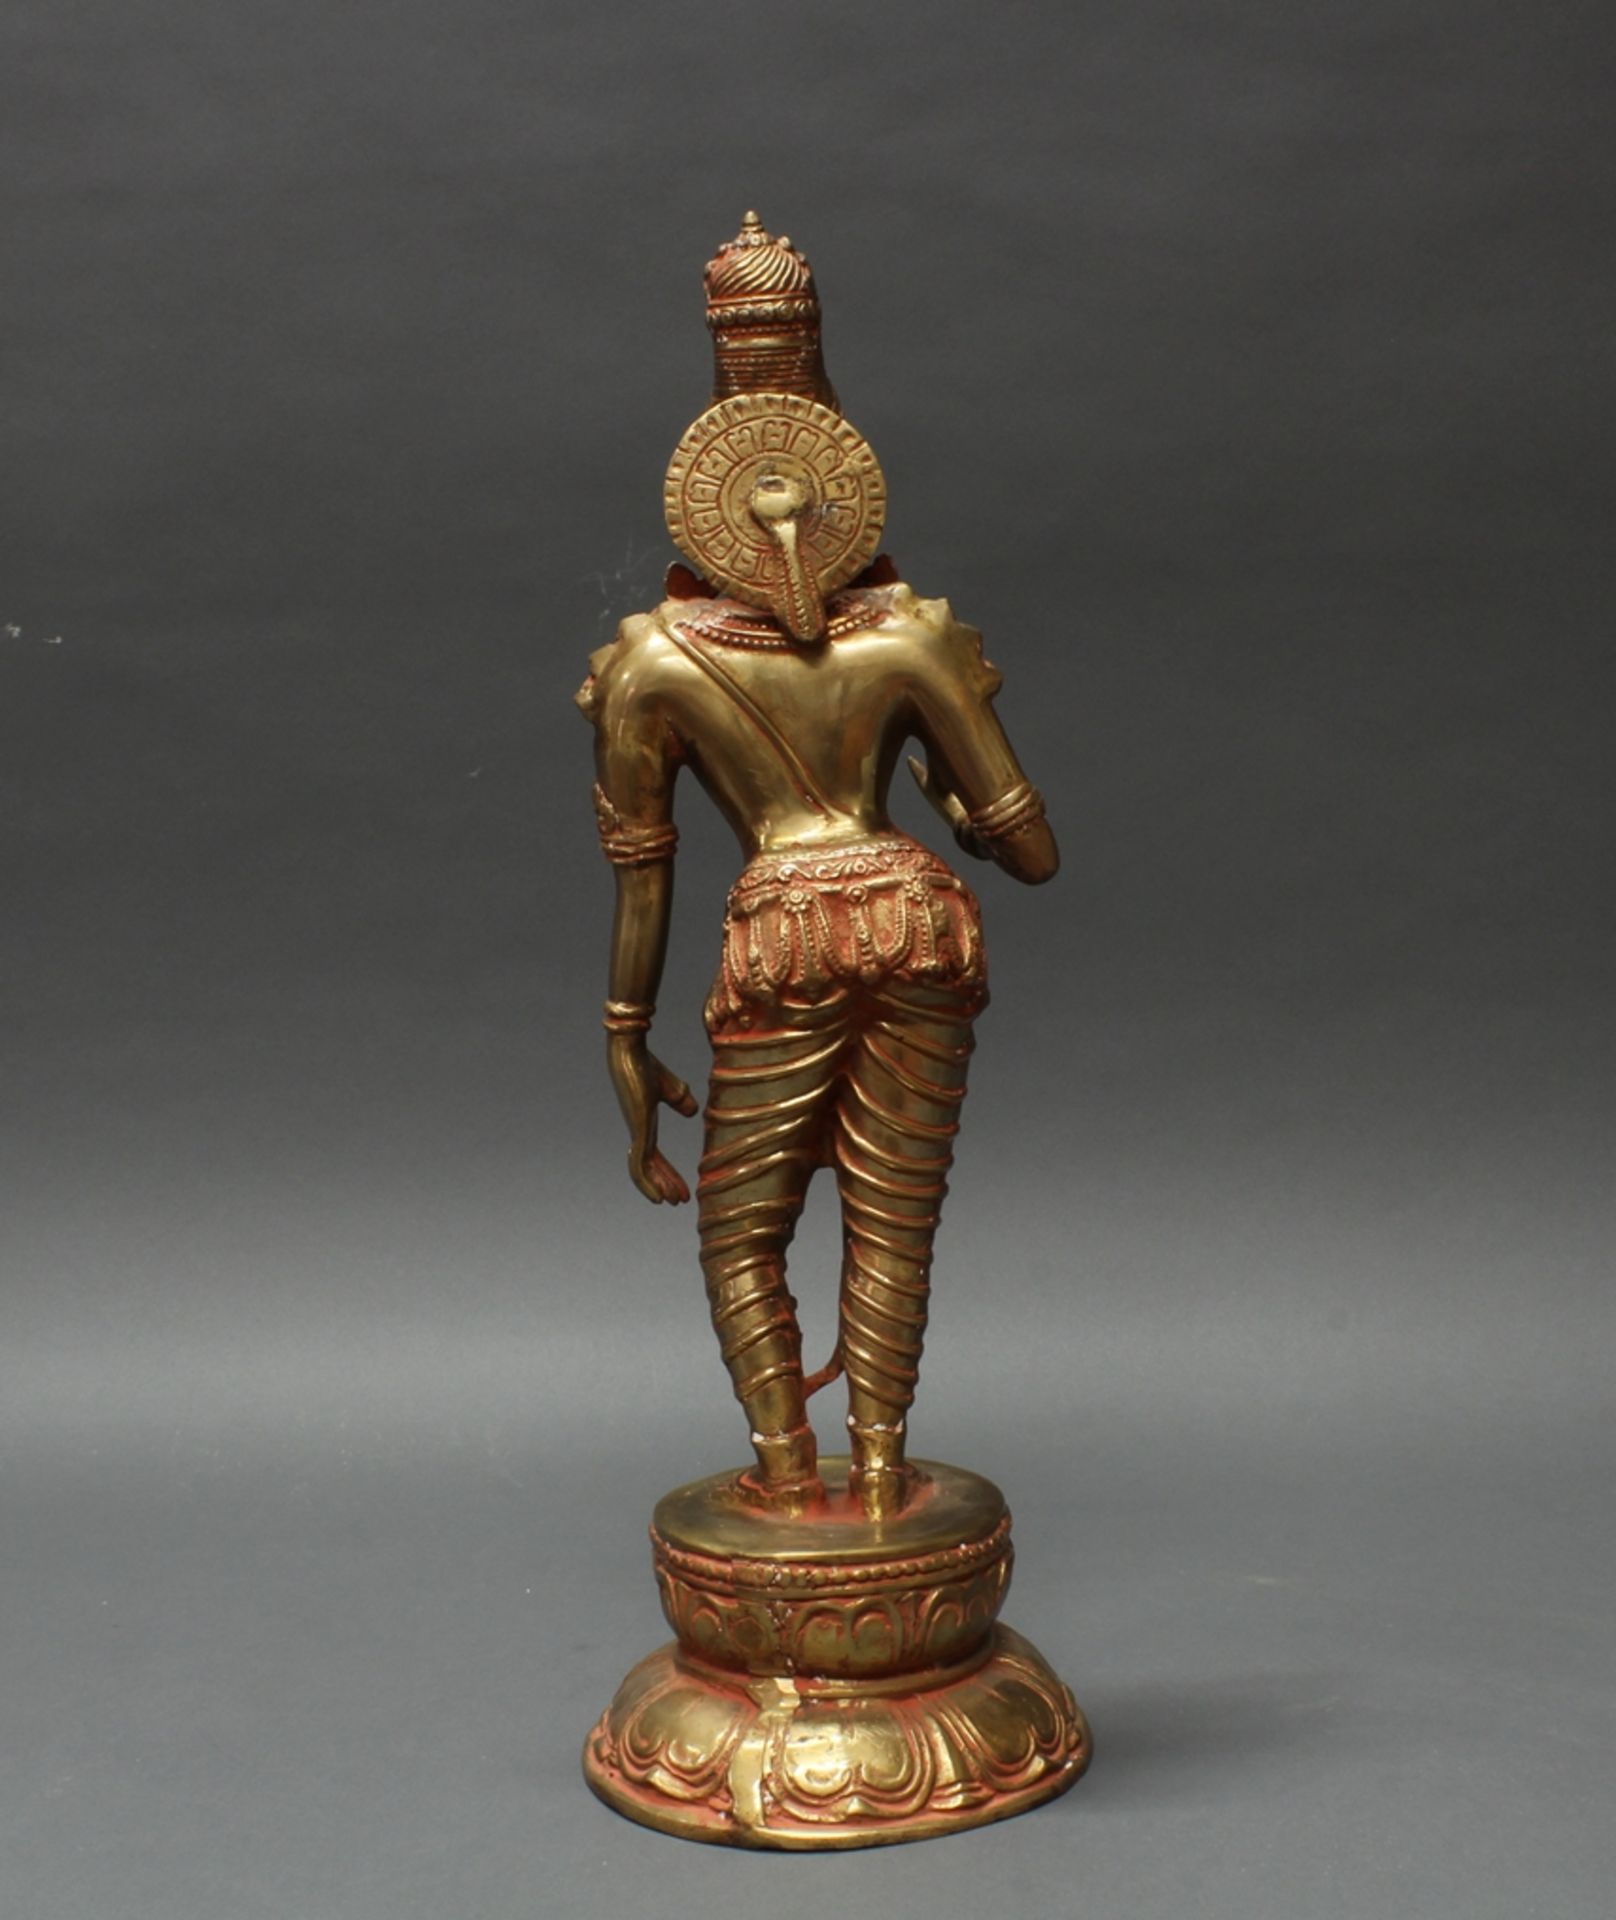 Figur, "Lakshmi", Indien, 20. Jh., Messingbronze, Reste von roter Bemalung, 50 cm hoch - Image 2 of 2